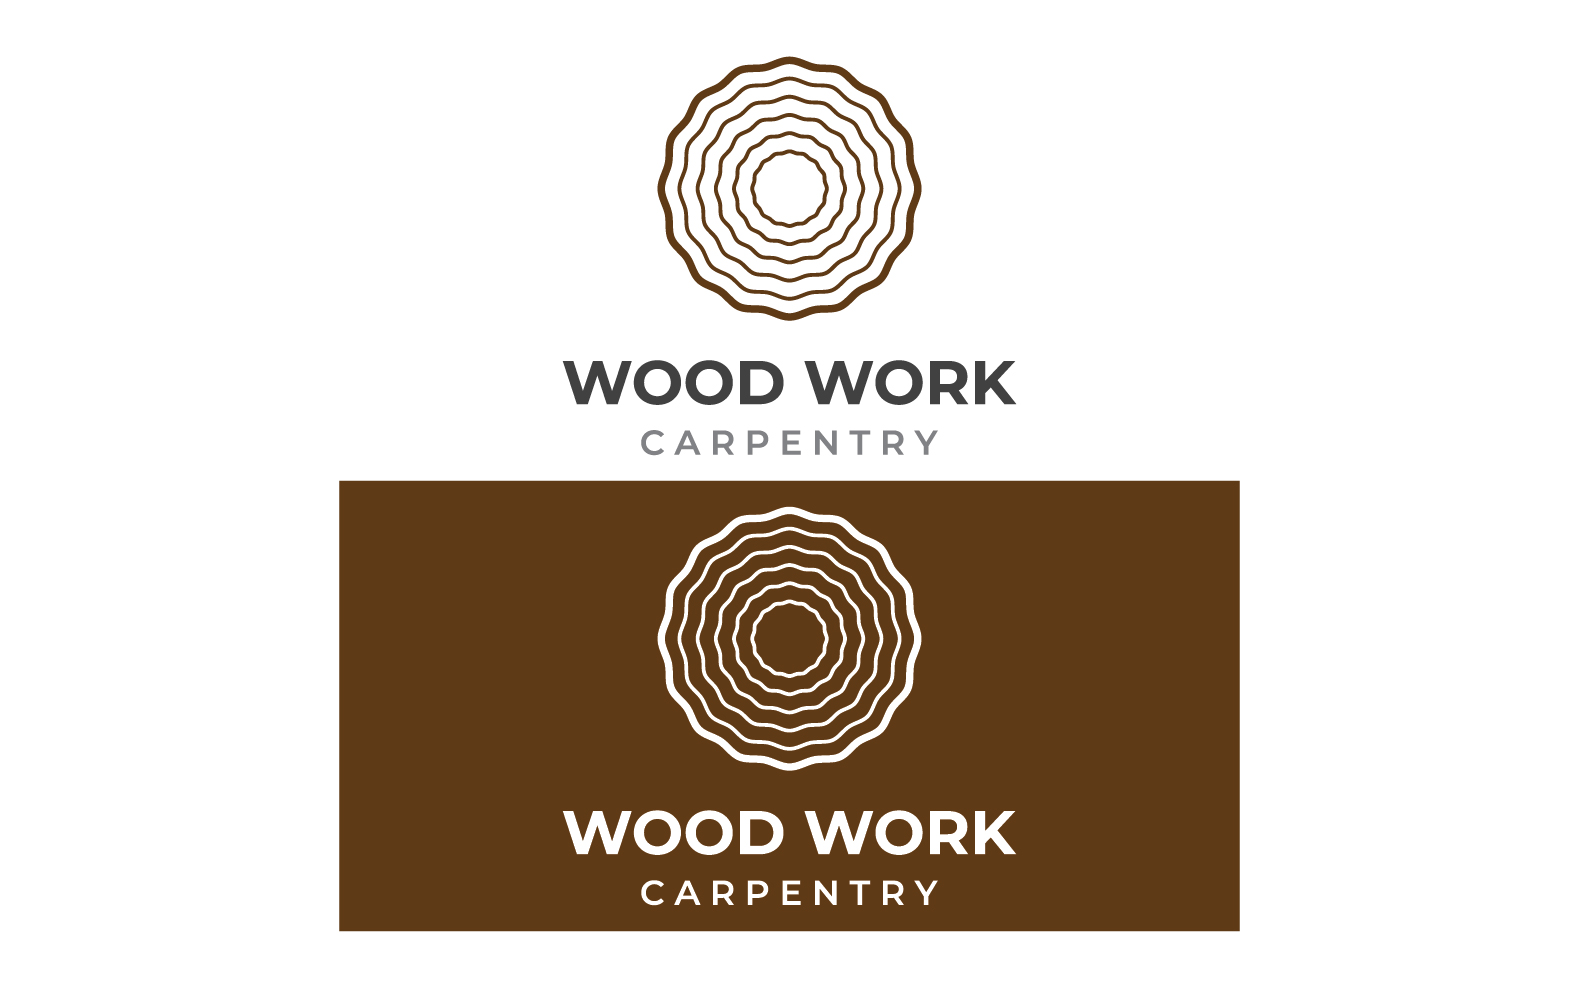 Wooden furniture work logo vector 16